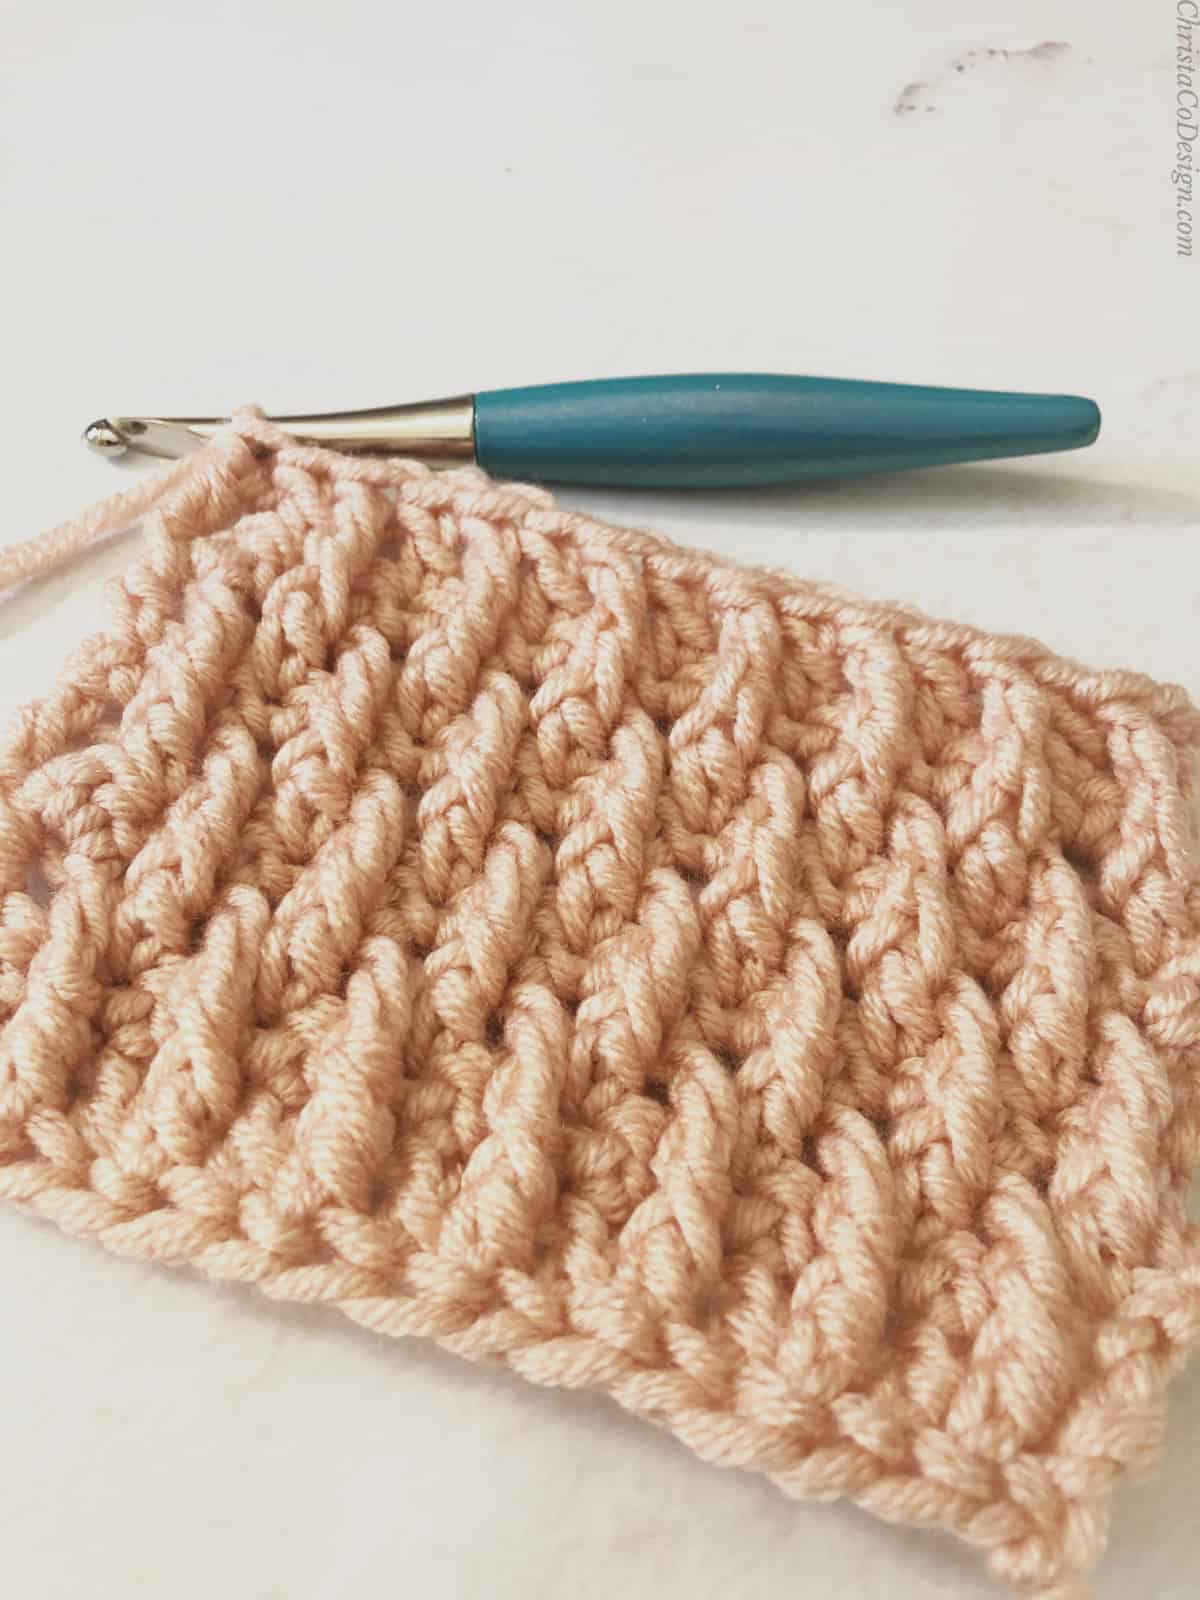 Alpine crochet stitch tutorial